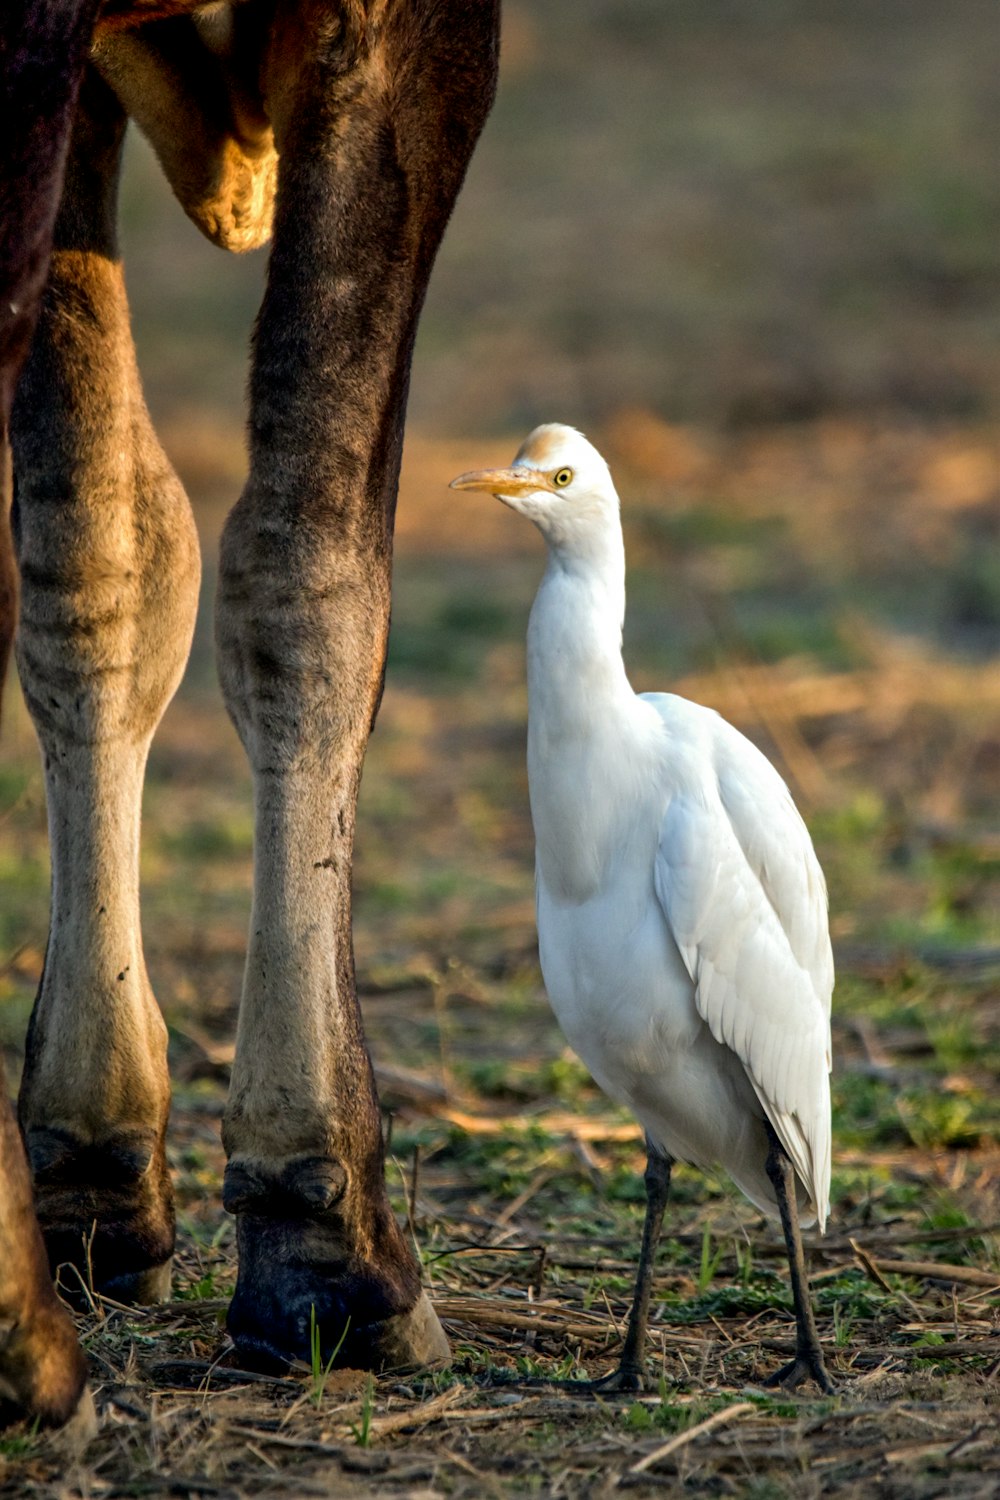 a white bird standing next to a brown horse